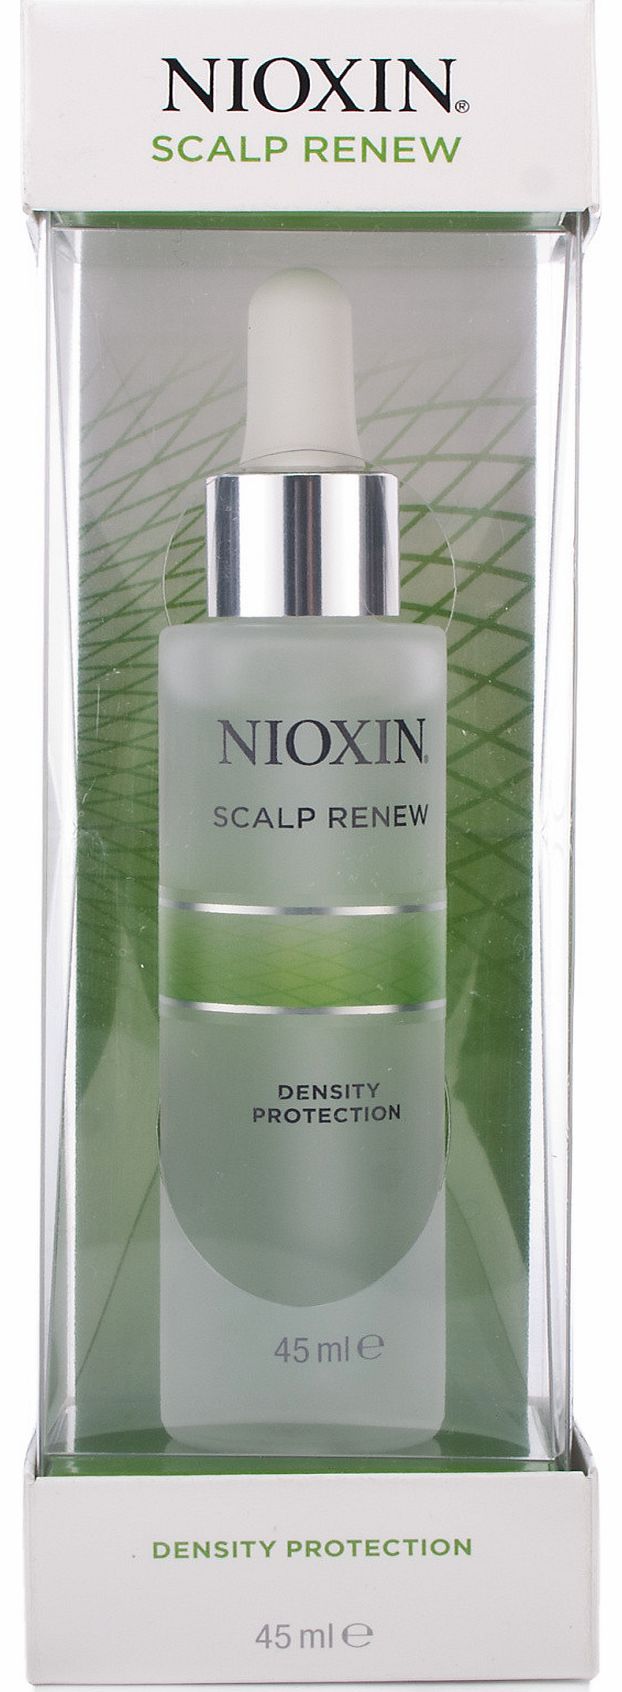 Nioxin Density Protection